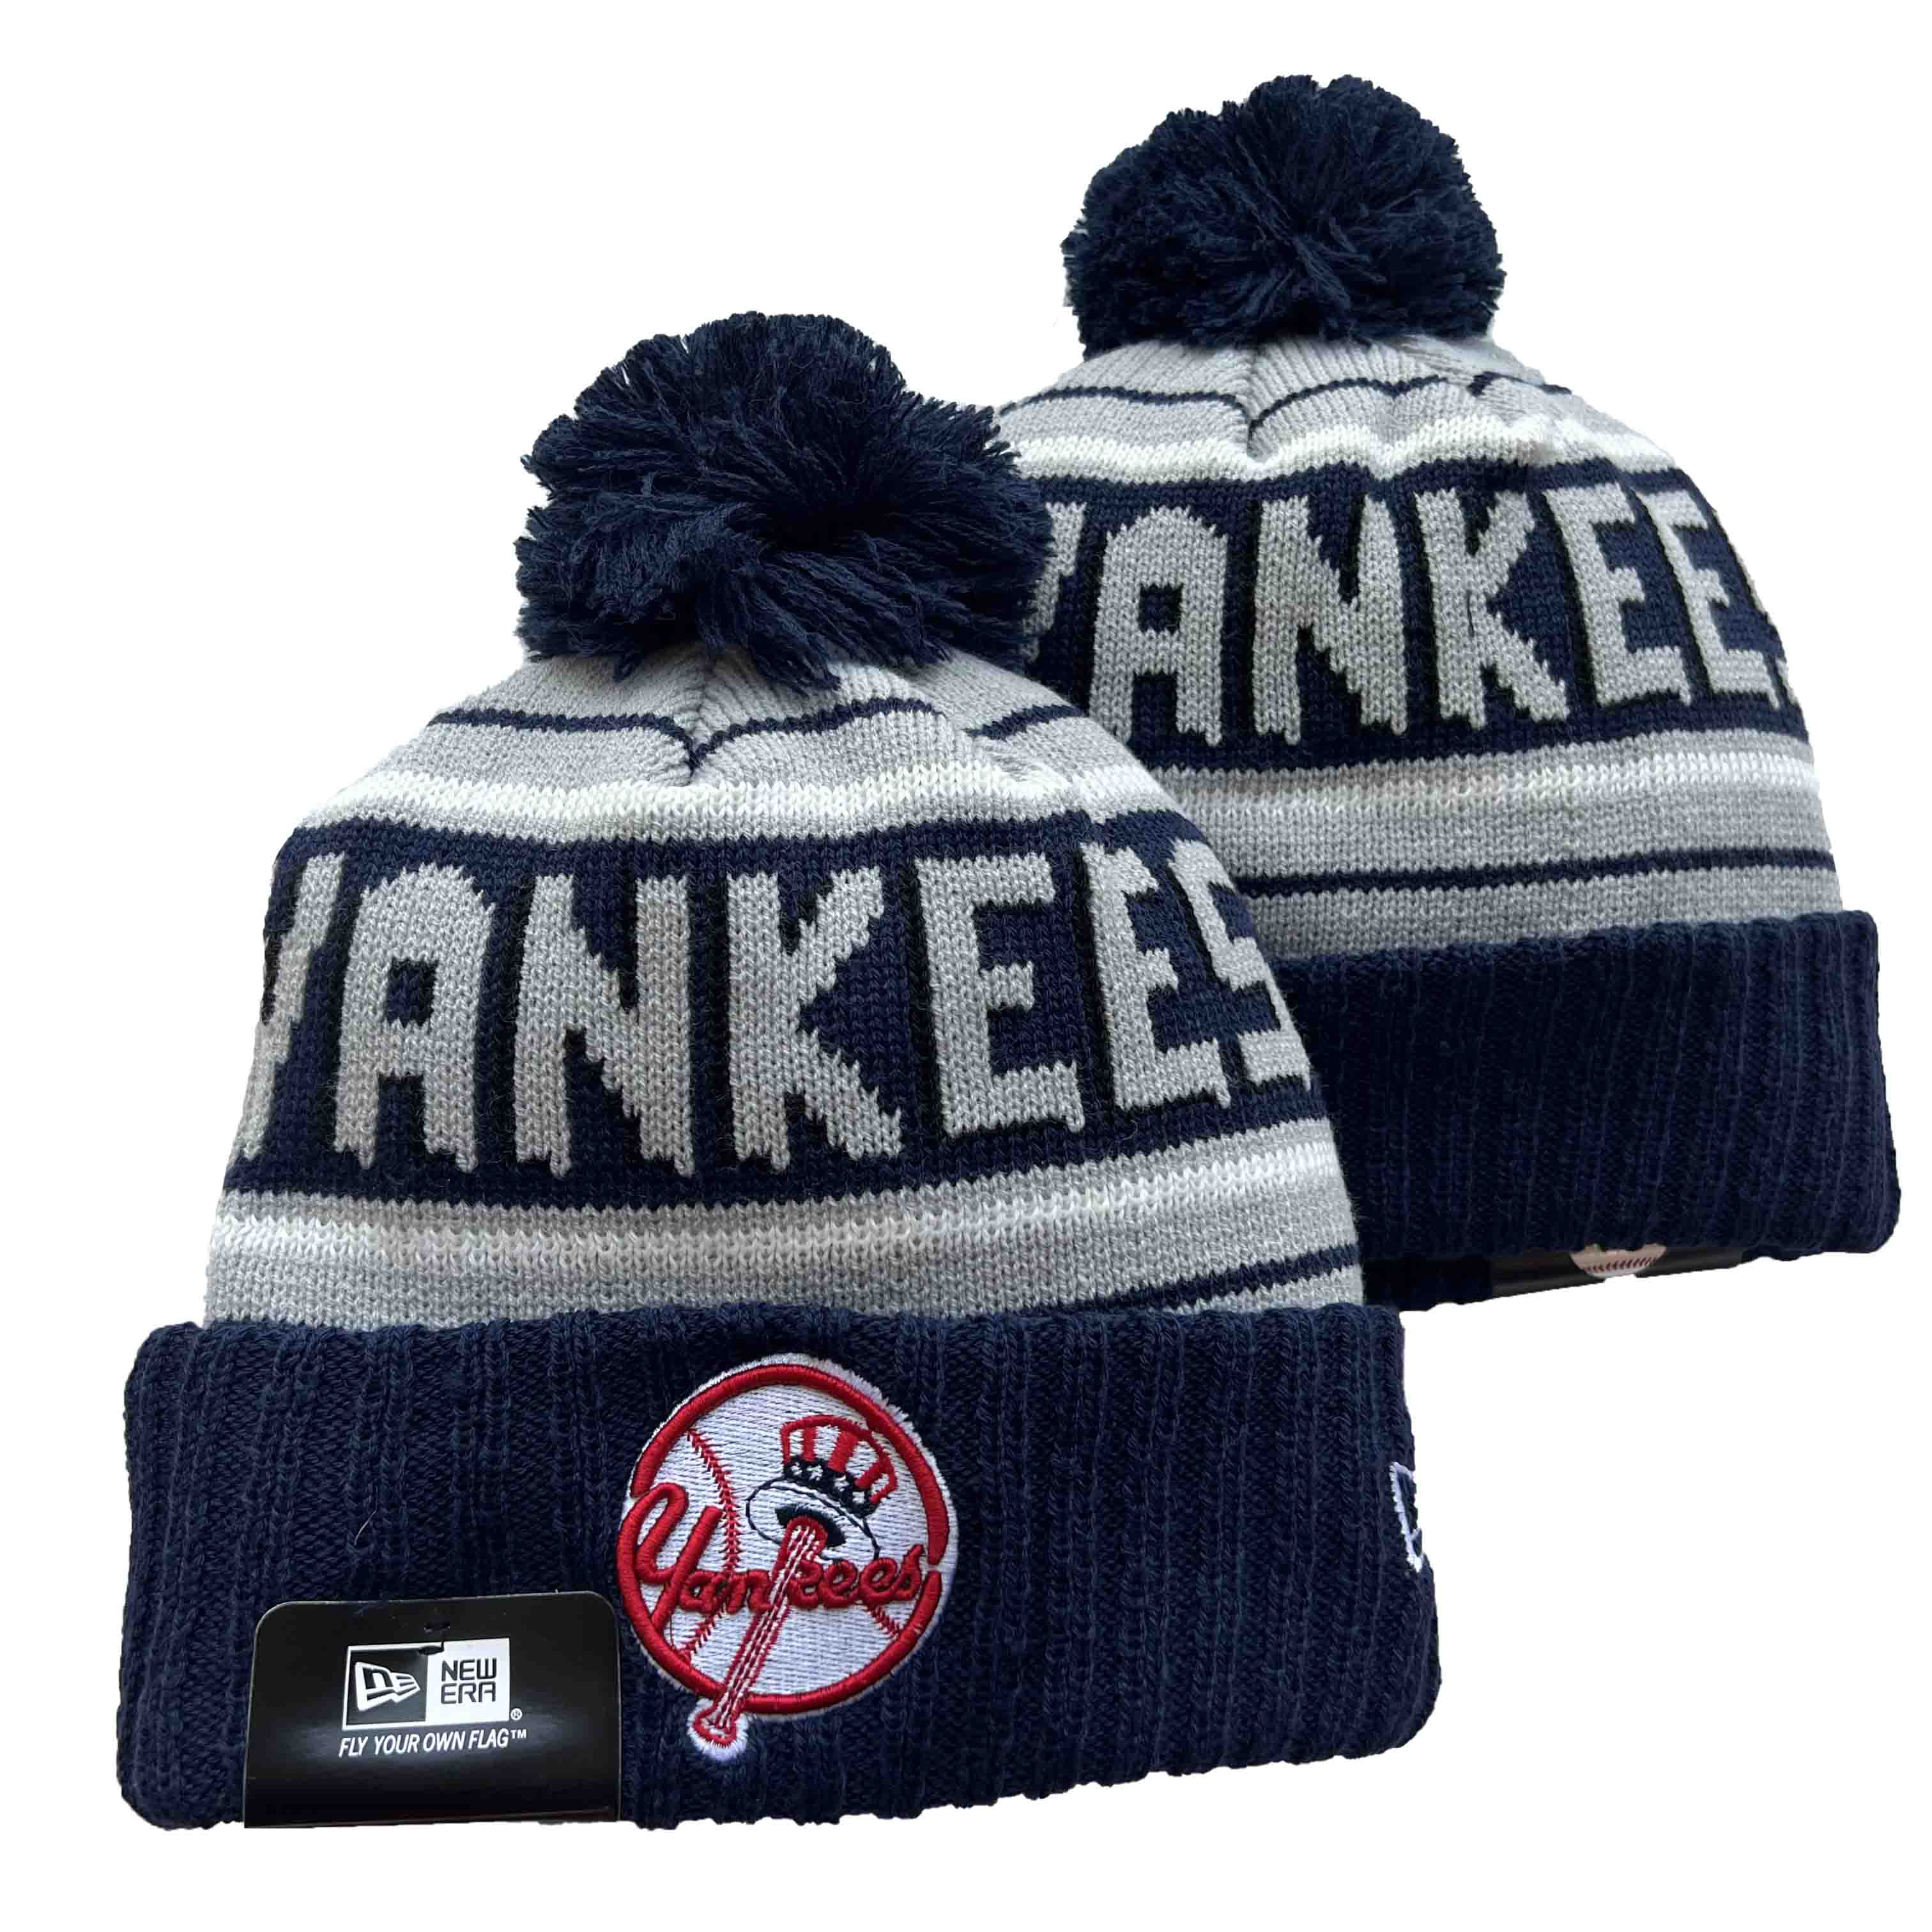 New York Yankees Knit Hats -6